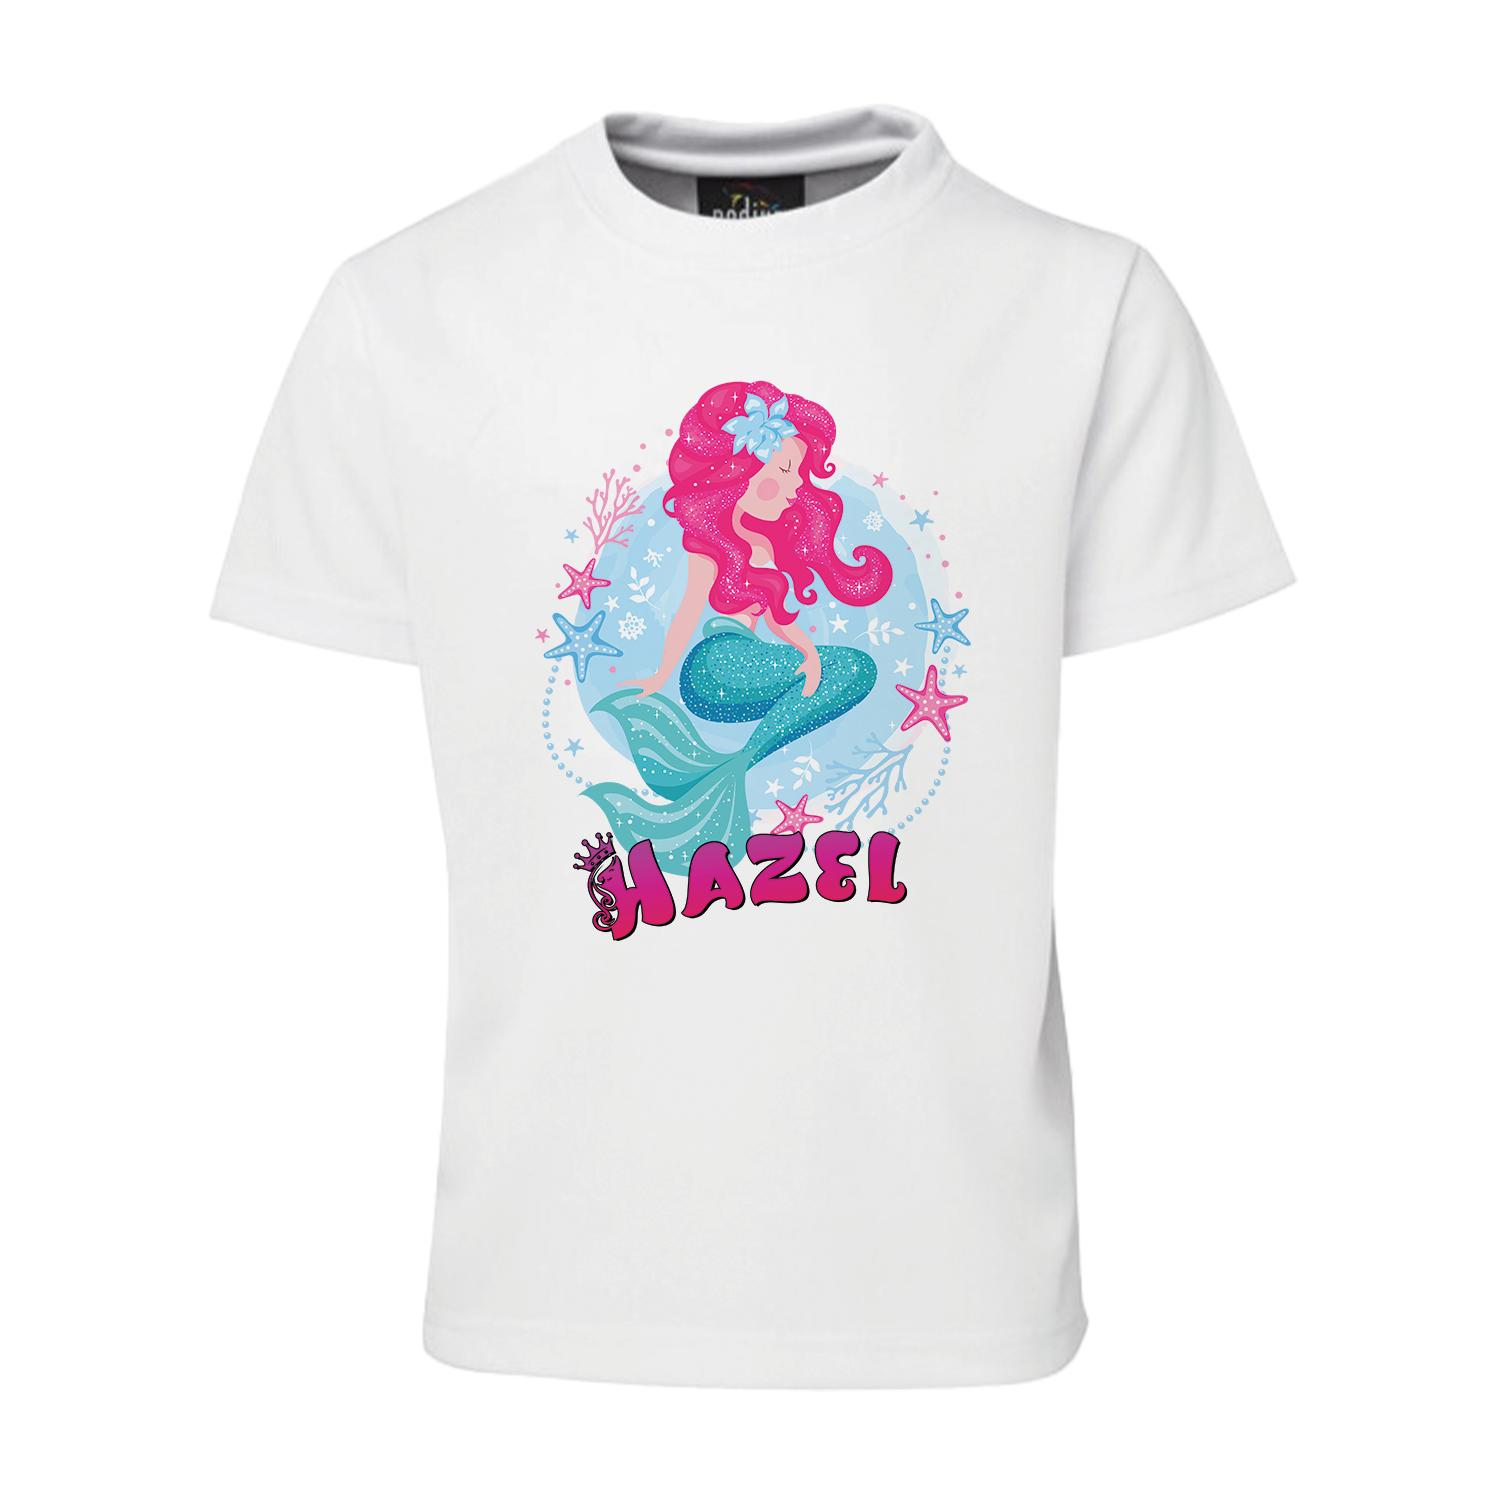 Mermaid themed sublimation T-Shirt